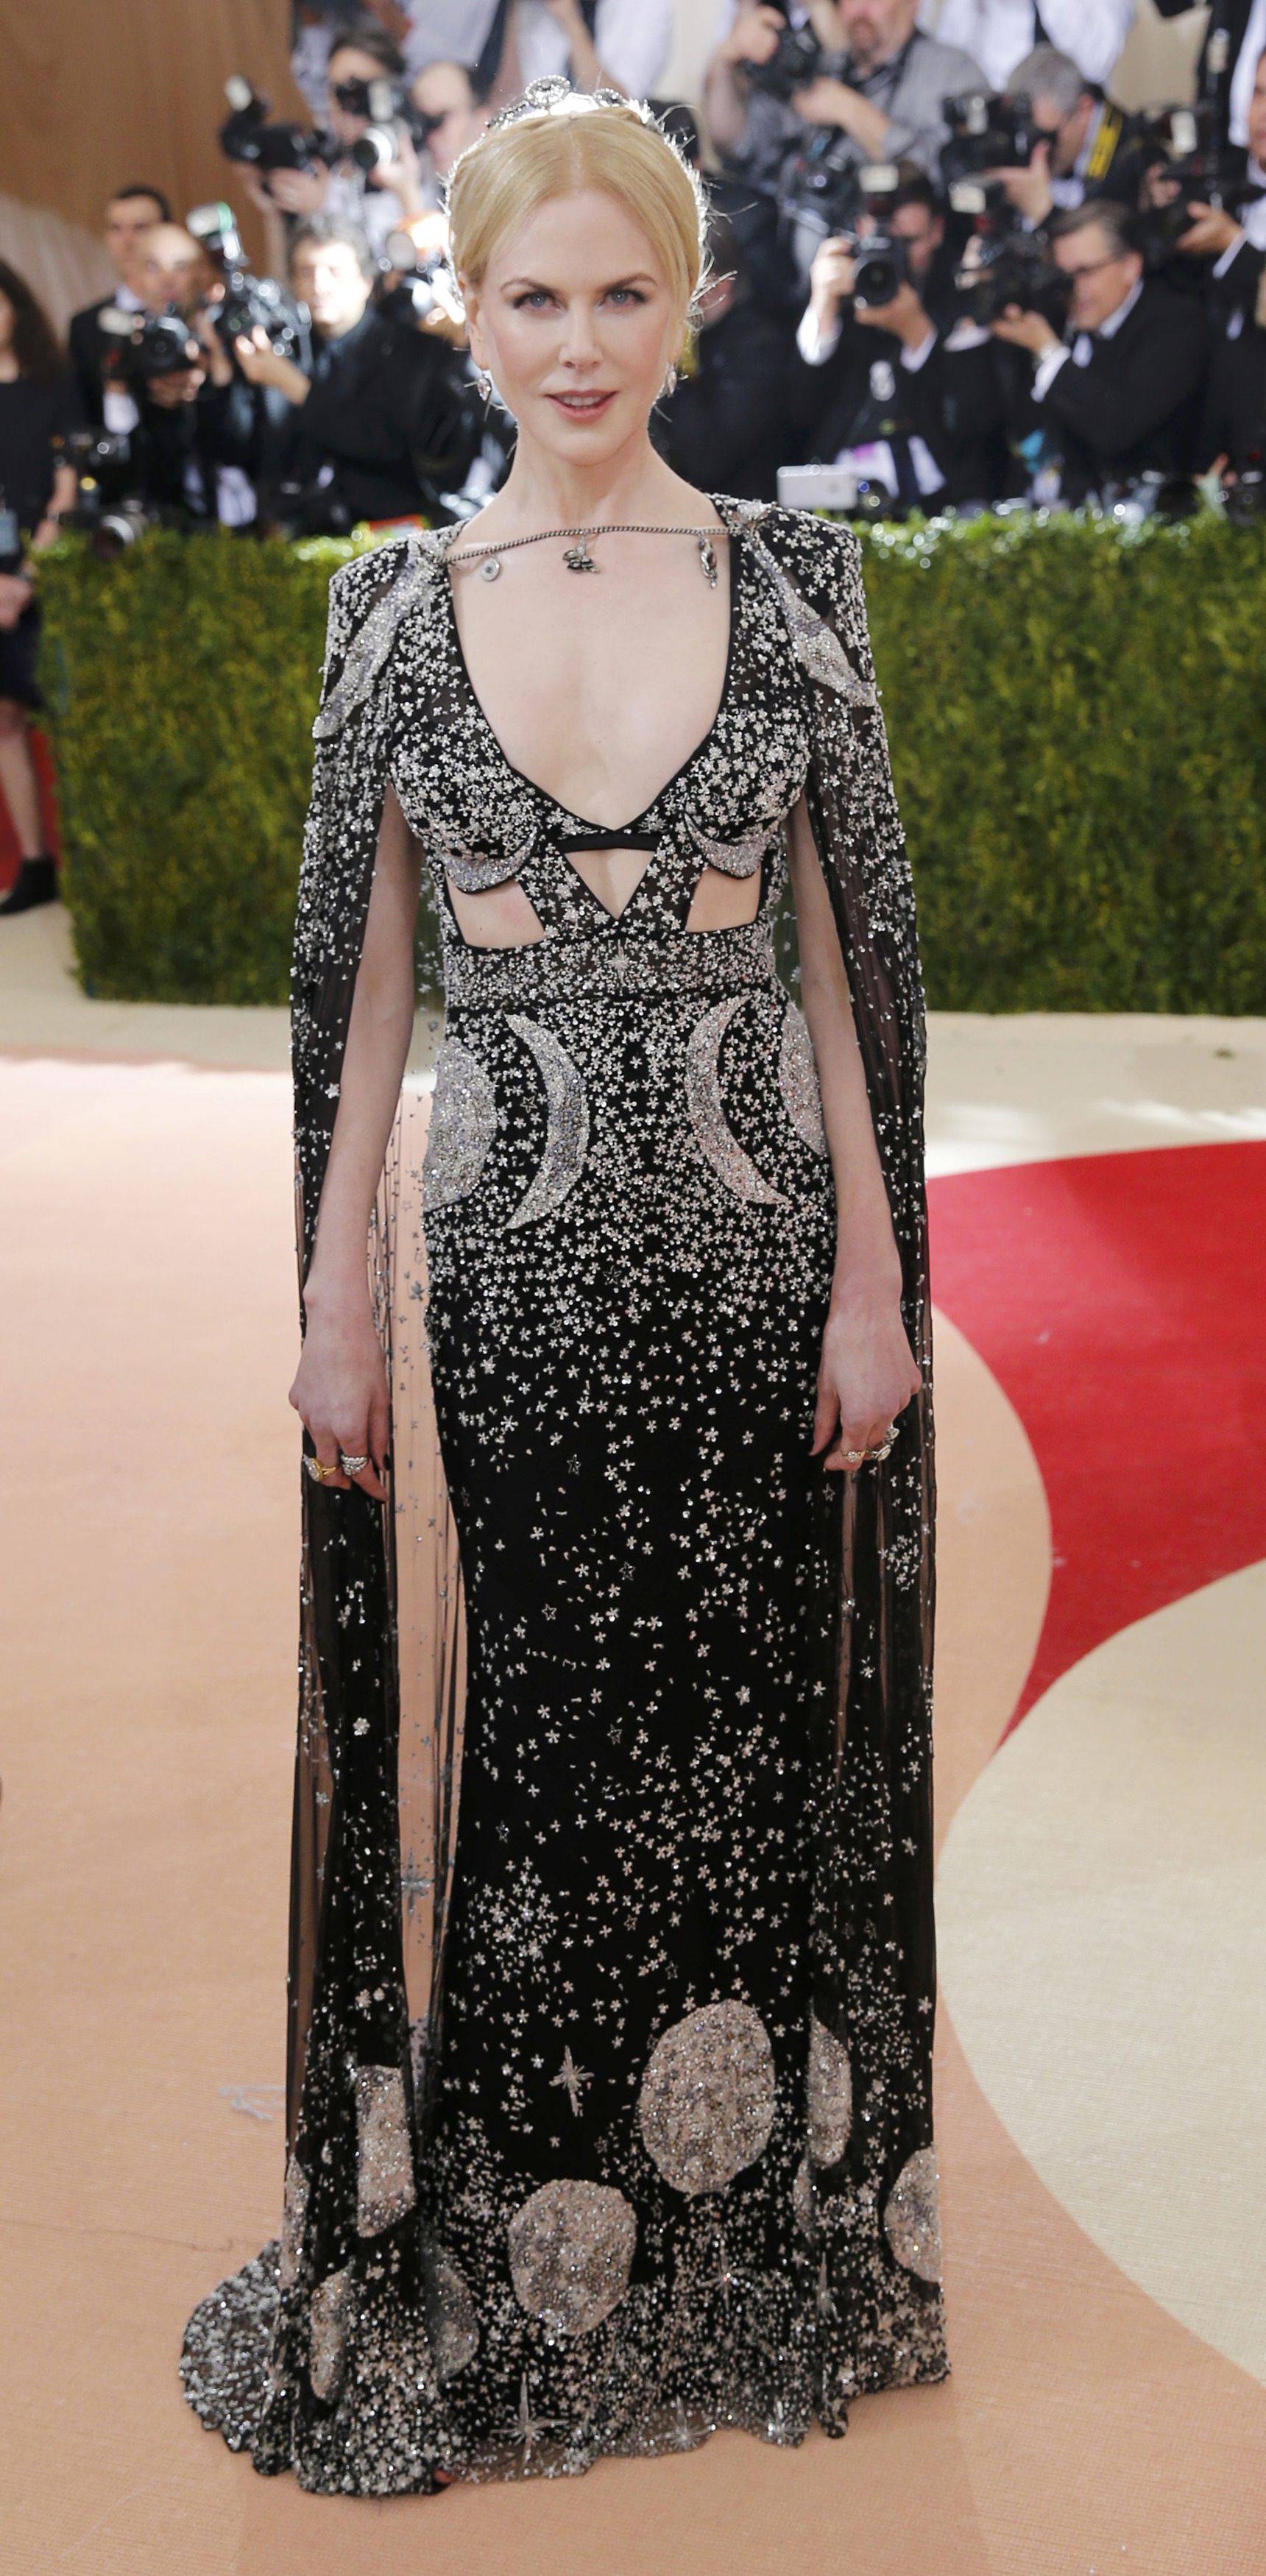 Actress Nicole Kidman arrives at the Met Gala in New York